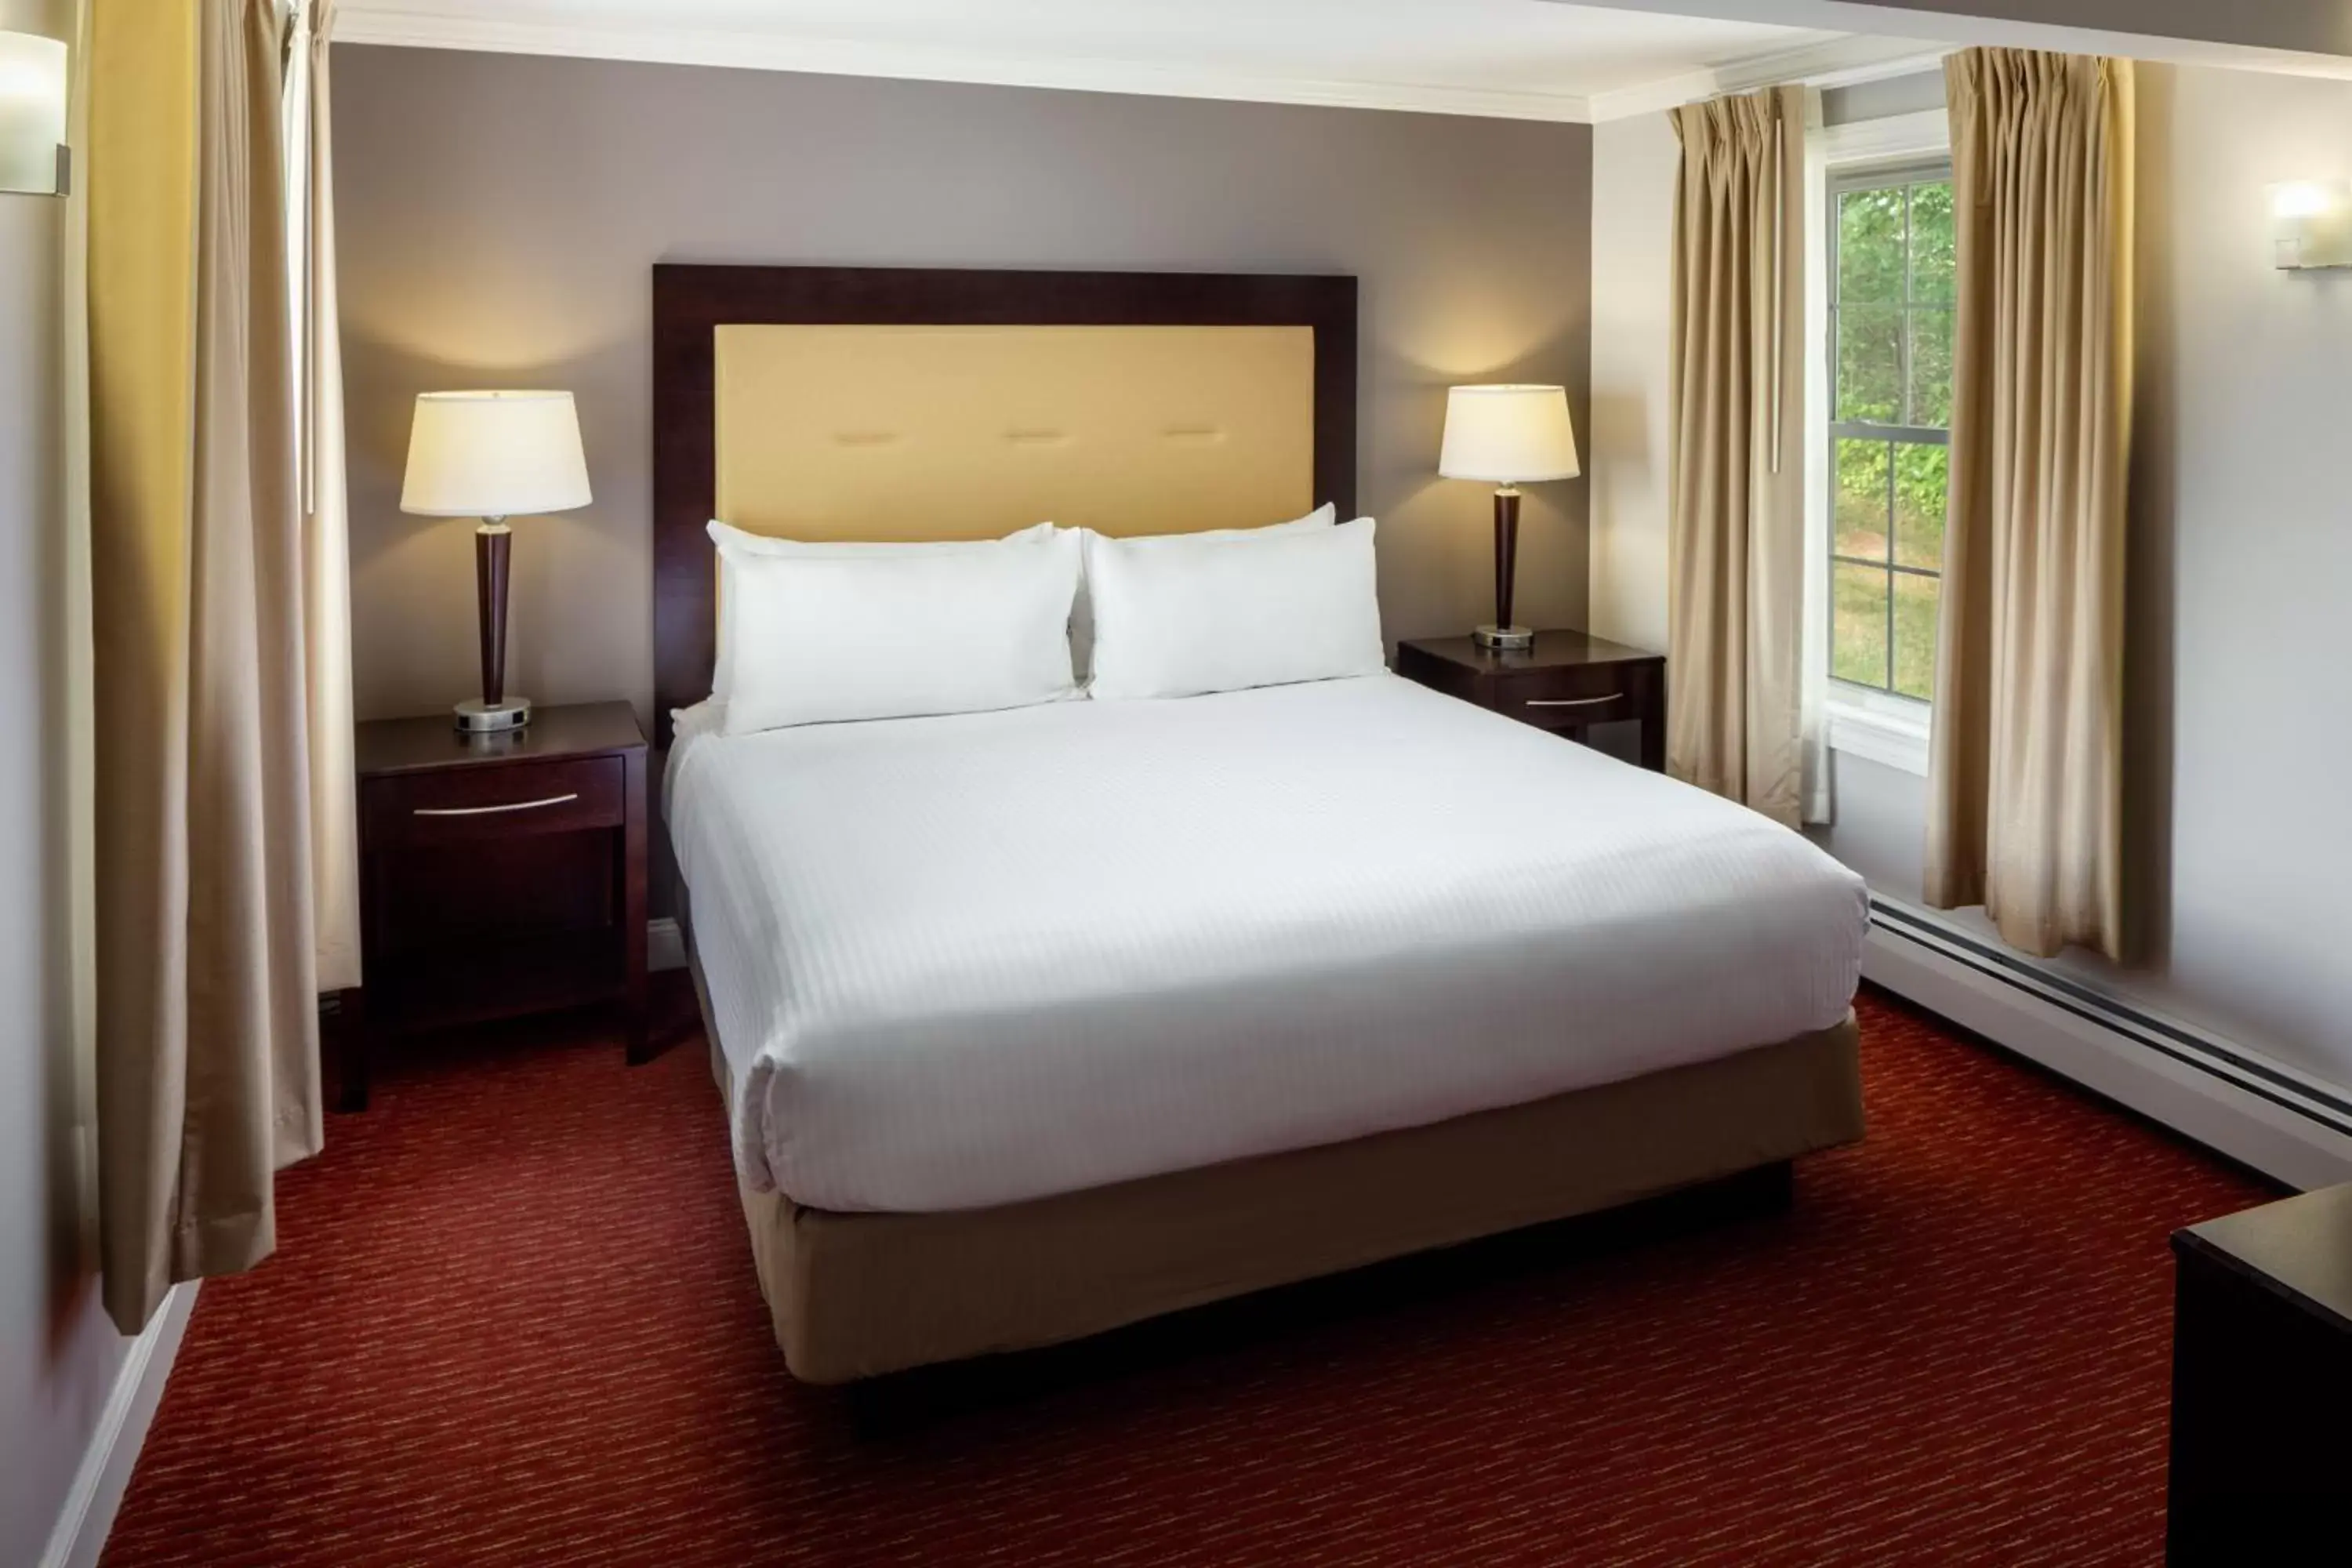 One-Bedroom Suite in Golden Gables Inn